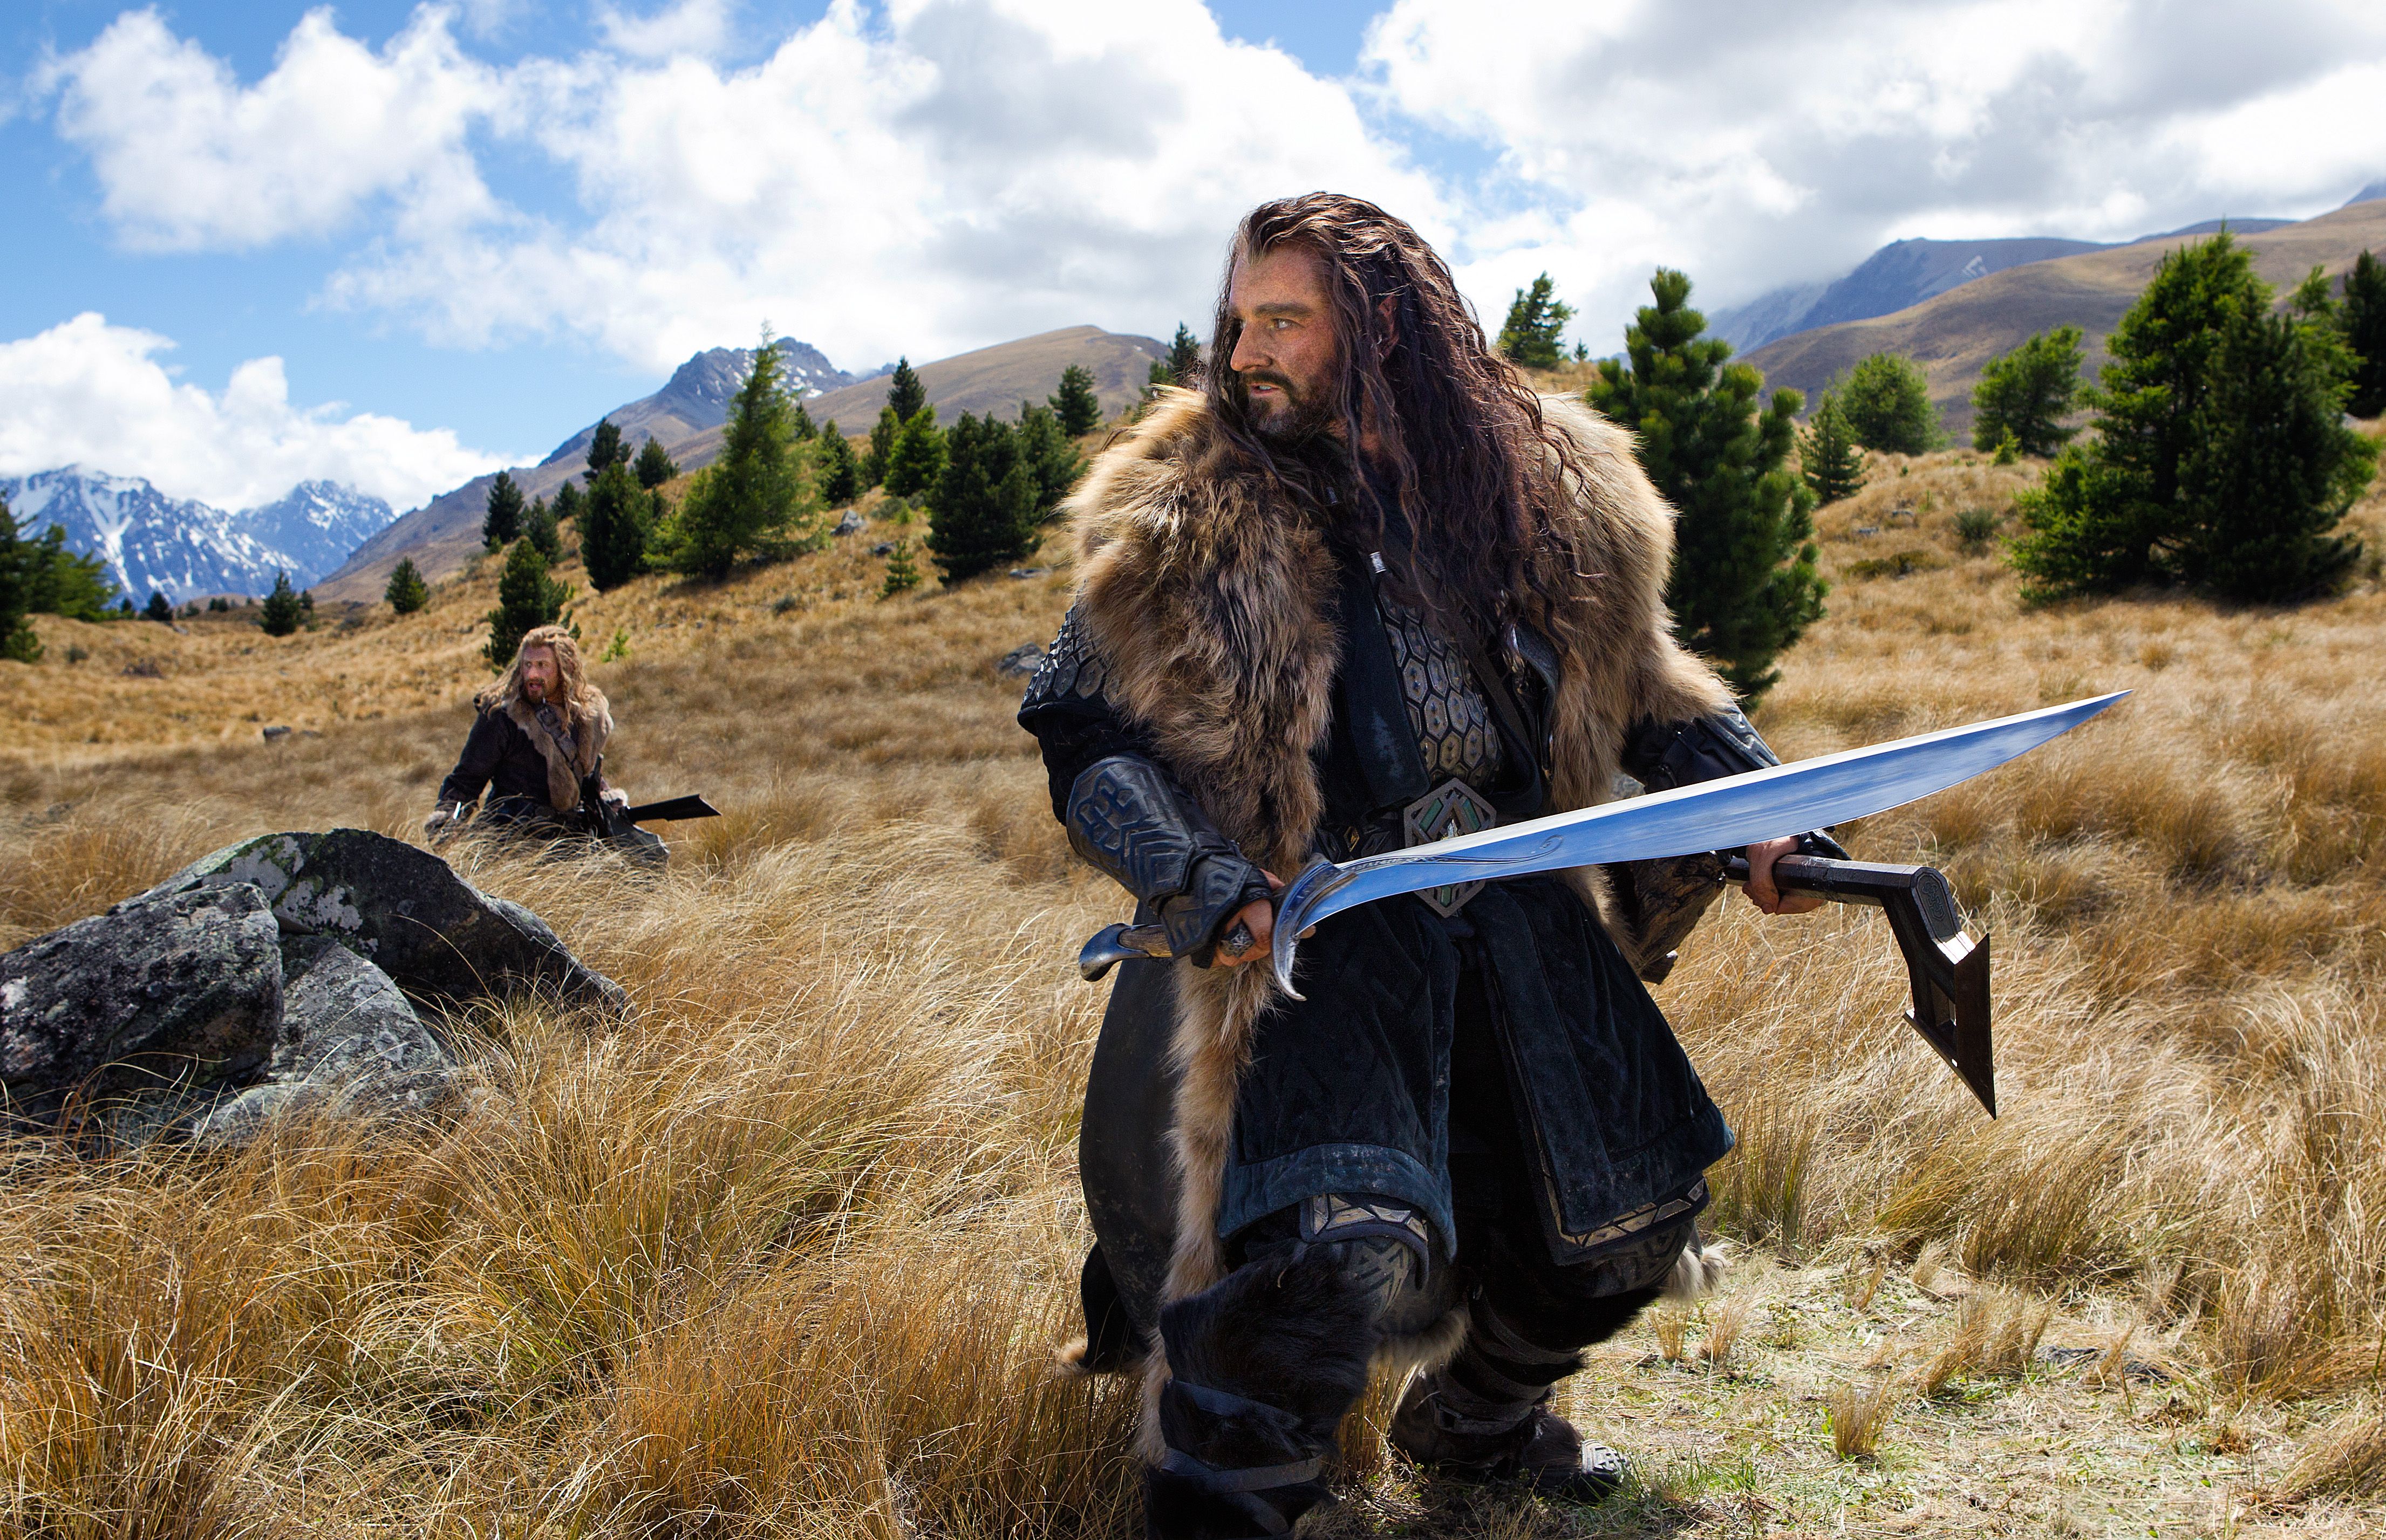 The Hobbit Orcrist - Sword of Thorin Oakenshield Photo